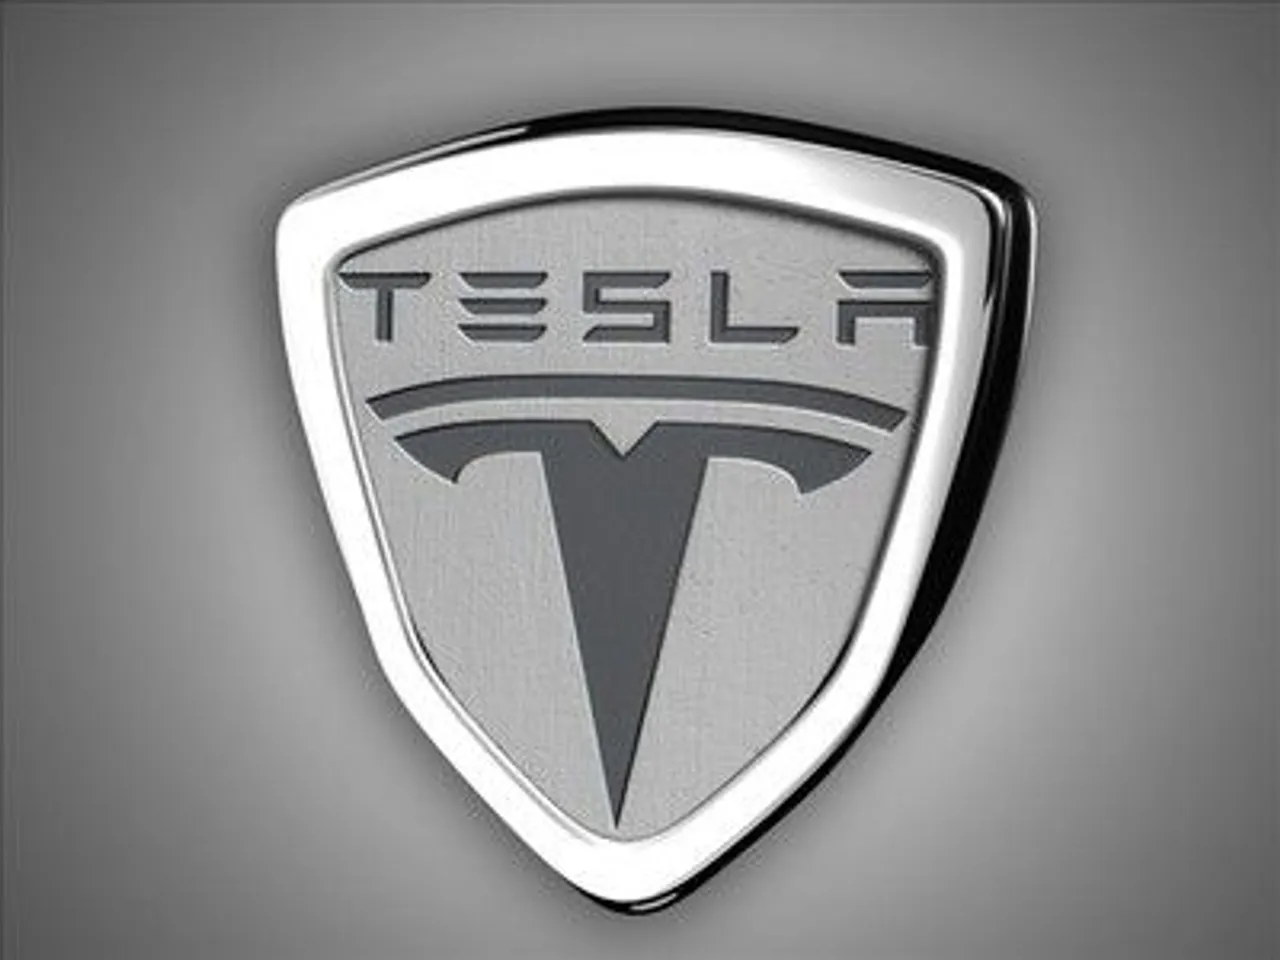 CIOL Tesla Self driving cars